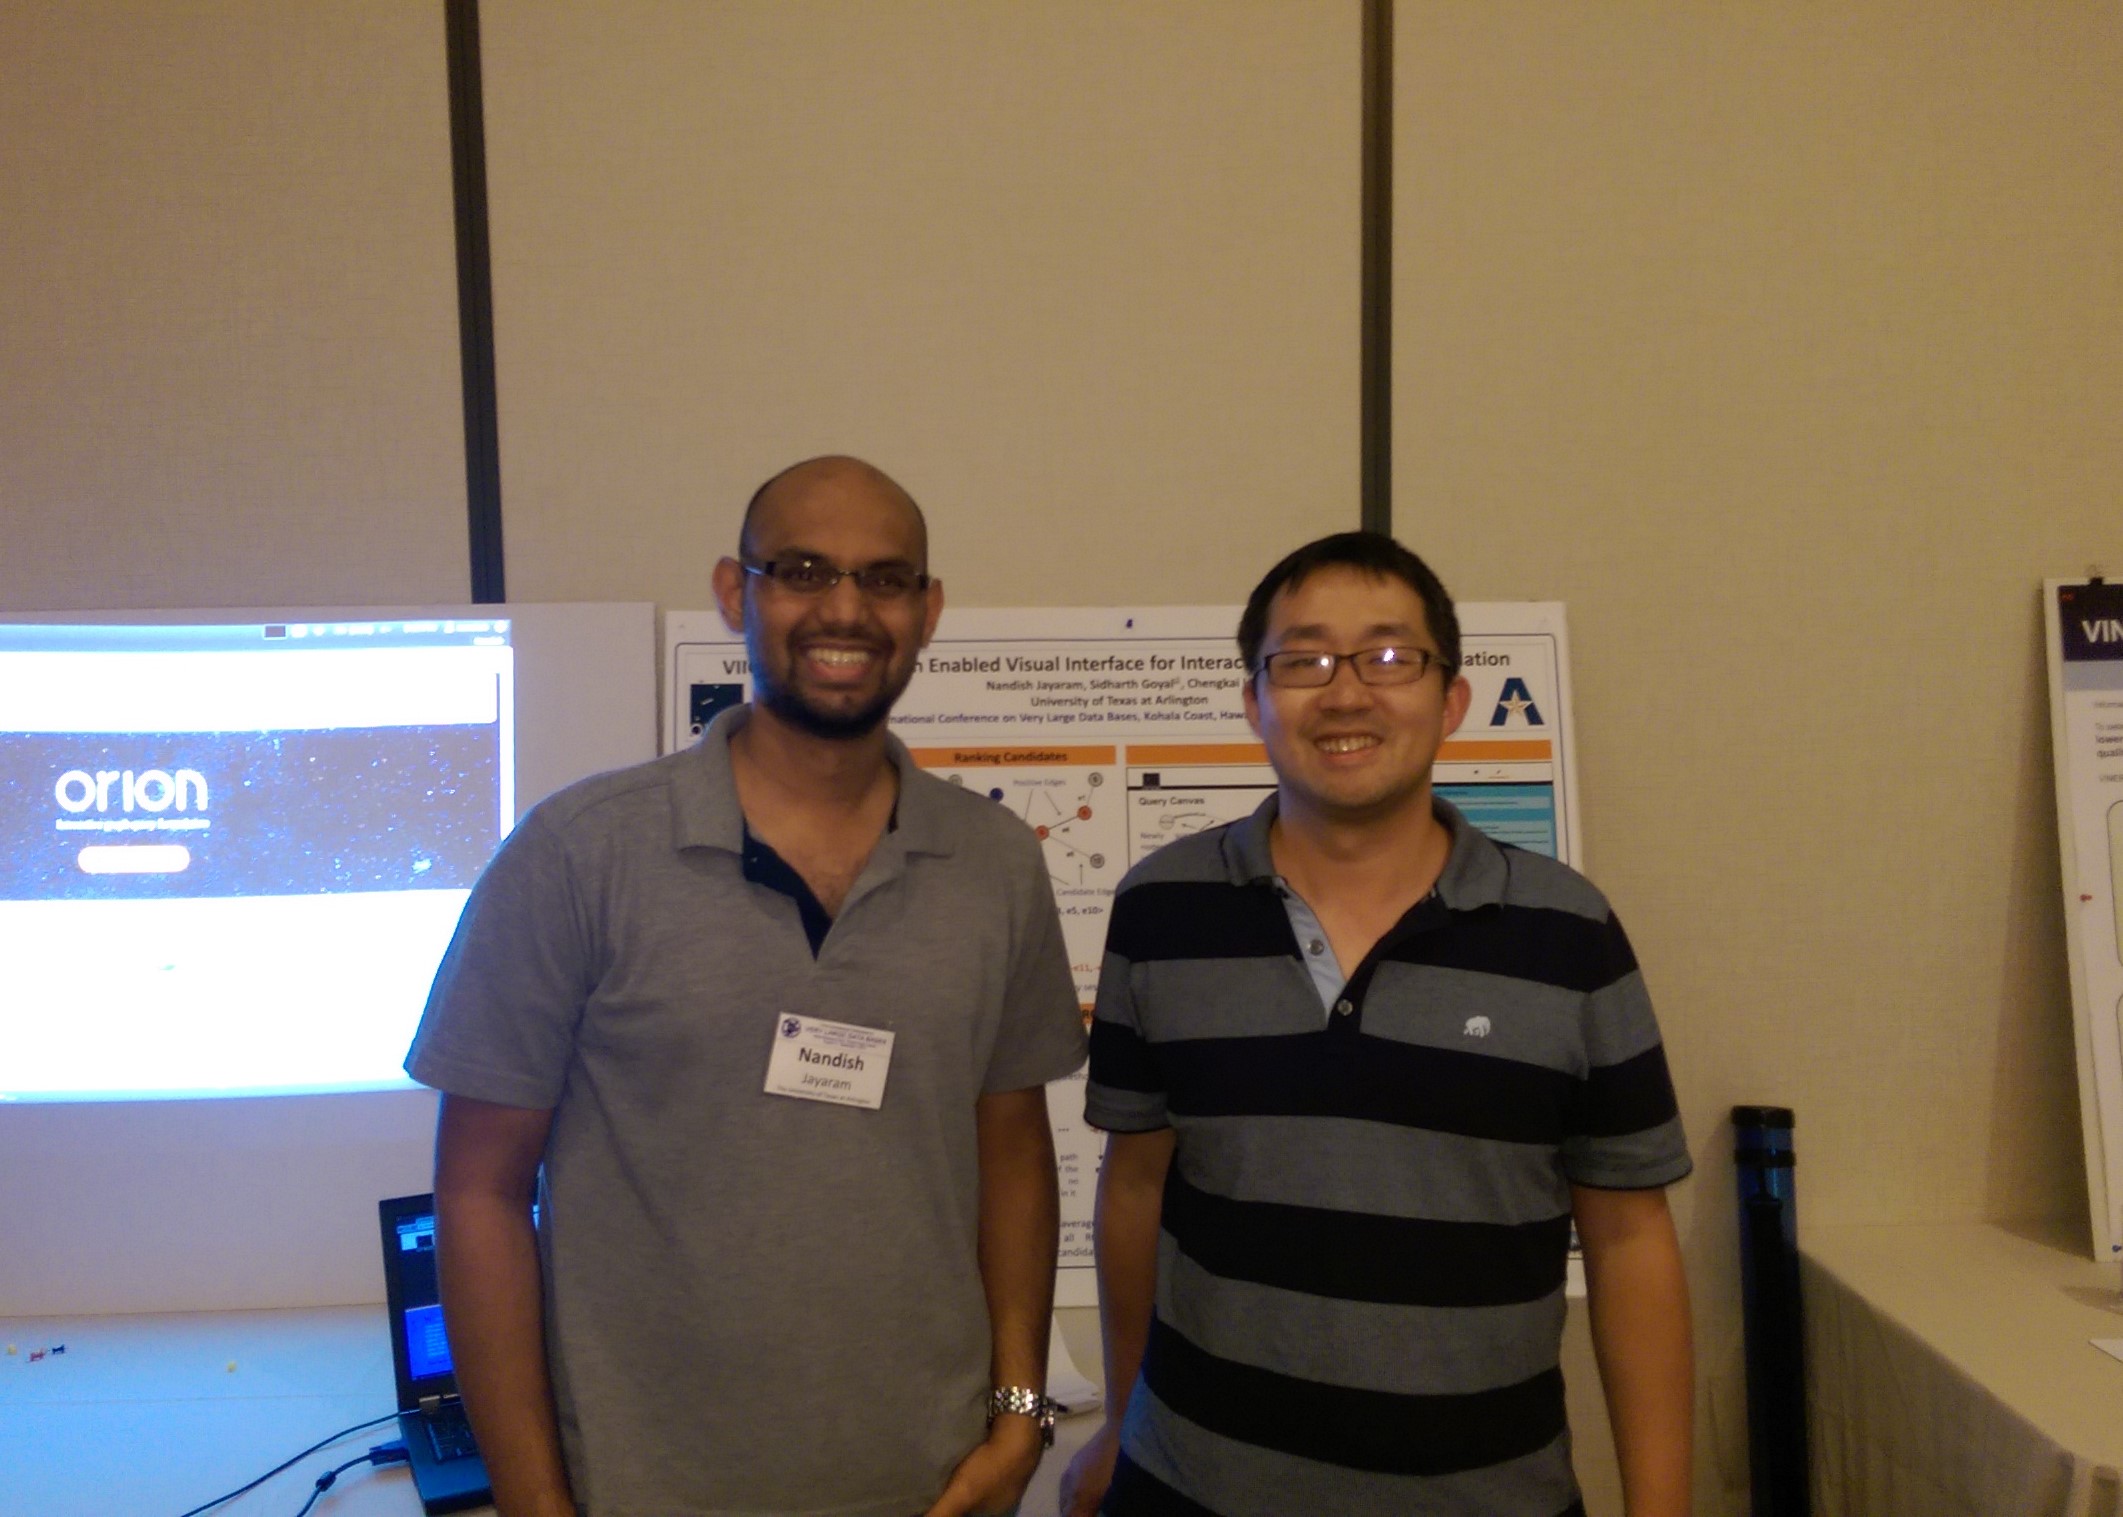 Nandish and Chengkai attending VLDB15 in Hawaii (Sept. 2015)